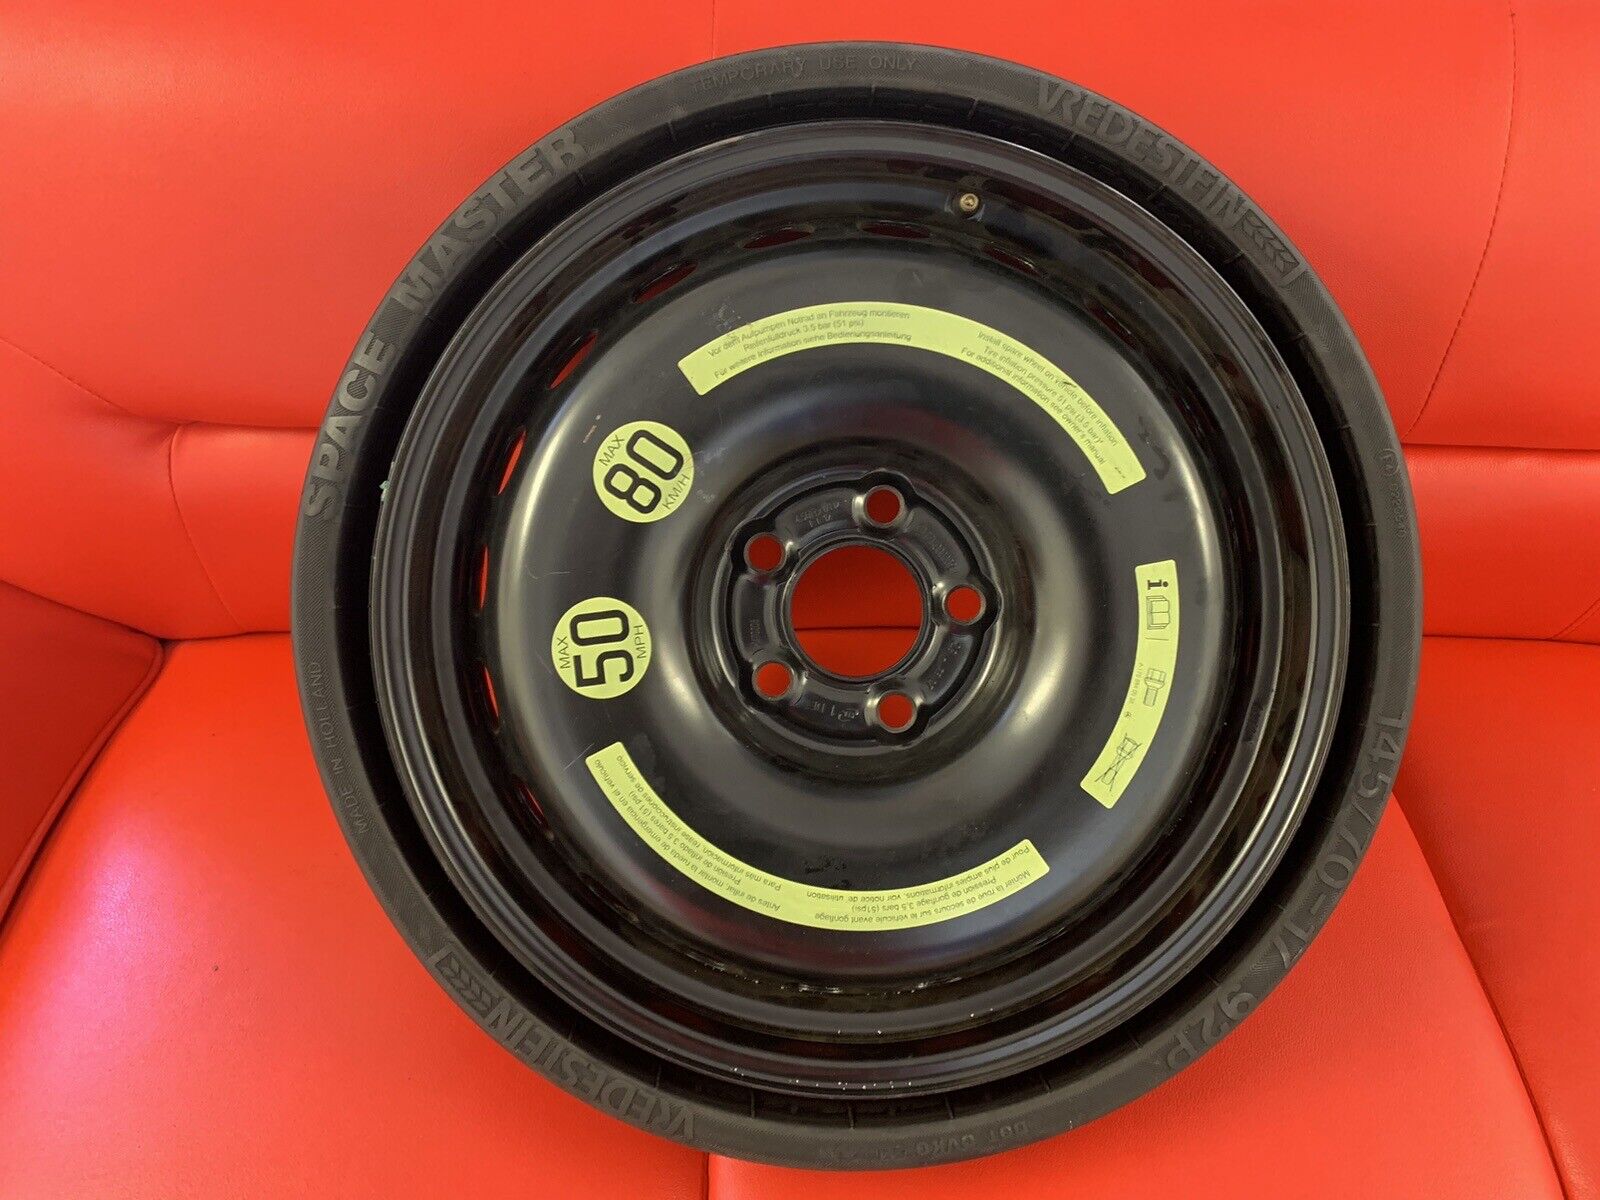 05-11 Mercedes R171 SLK280 Emergency Spare Tire Wheel Donut Space Saver 4.5Bx17